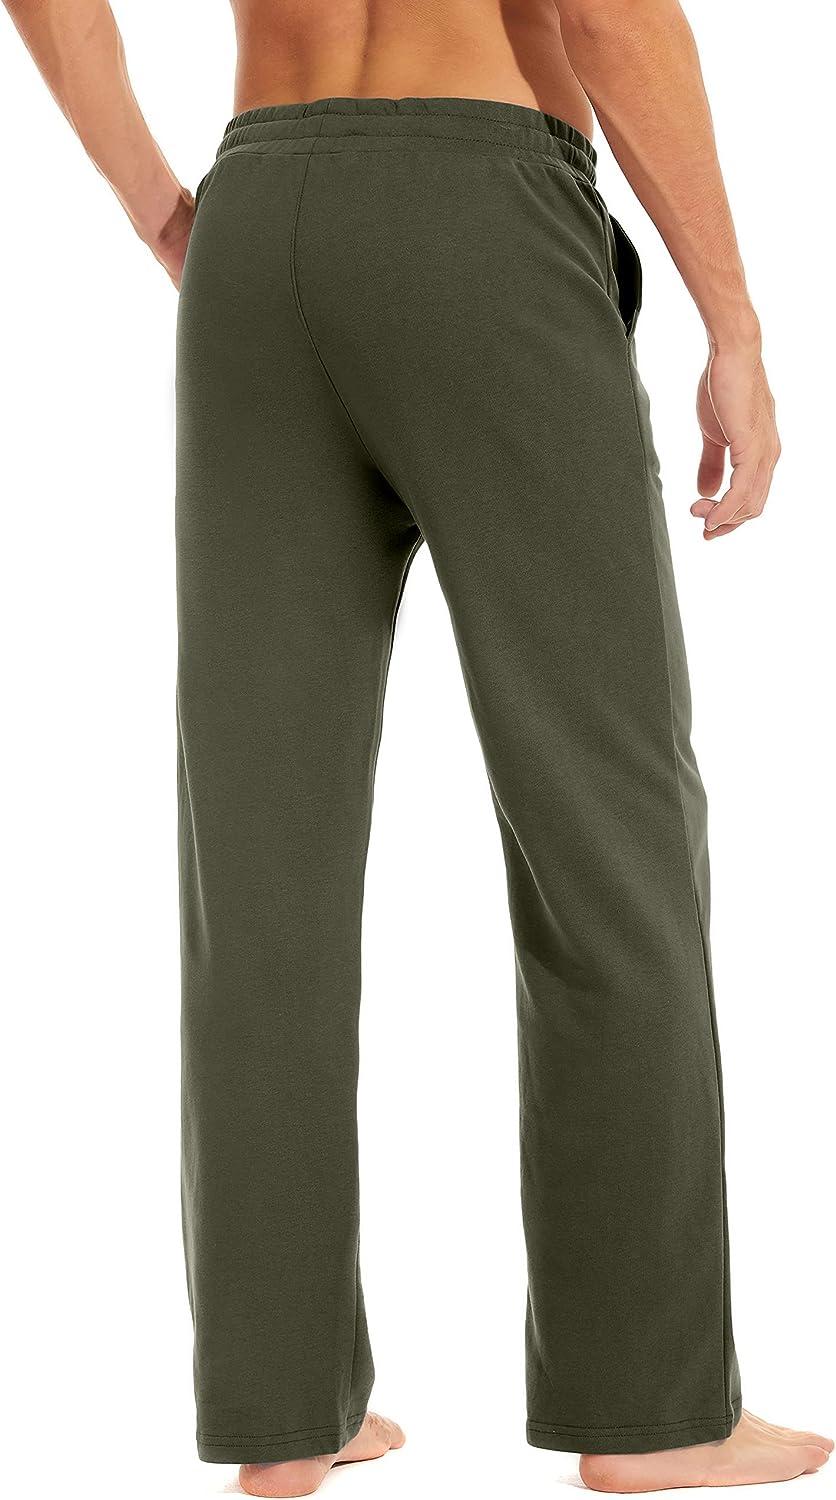 YUHAOTIN Sweatpants Men Open Bottom Tall Mens Joggers Sweatpants Long Men's  Elastic Pants Solid Color Breathable Cotton Linen Loose Casual Pants 